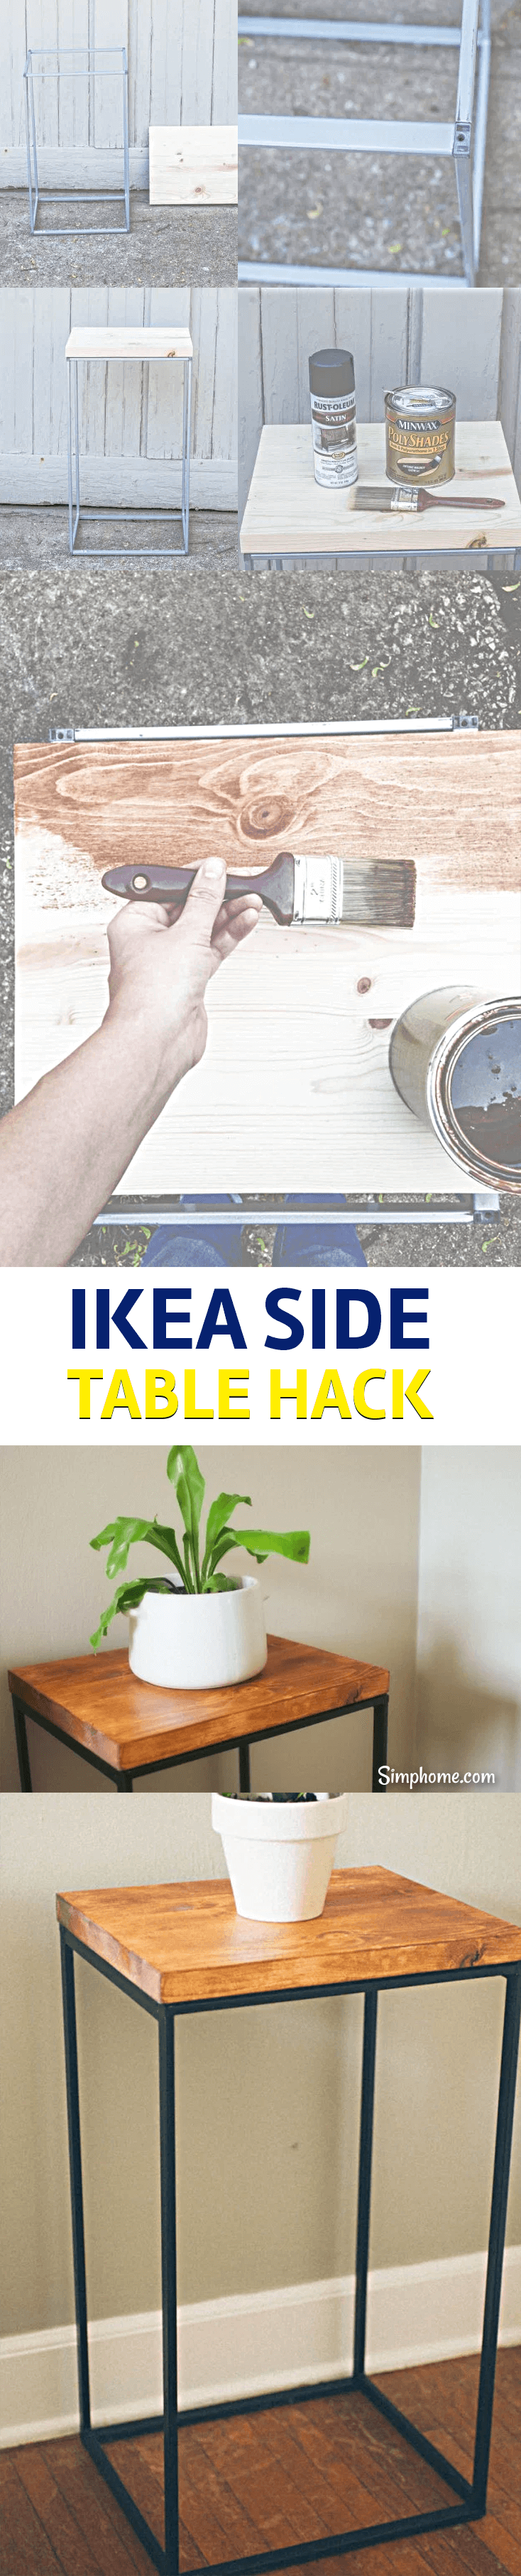 Making a Side Table ikea hack 6 simphome com p